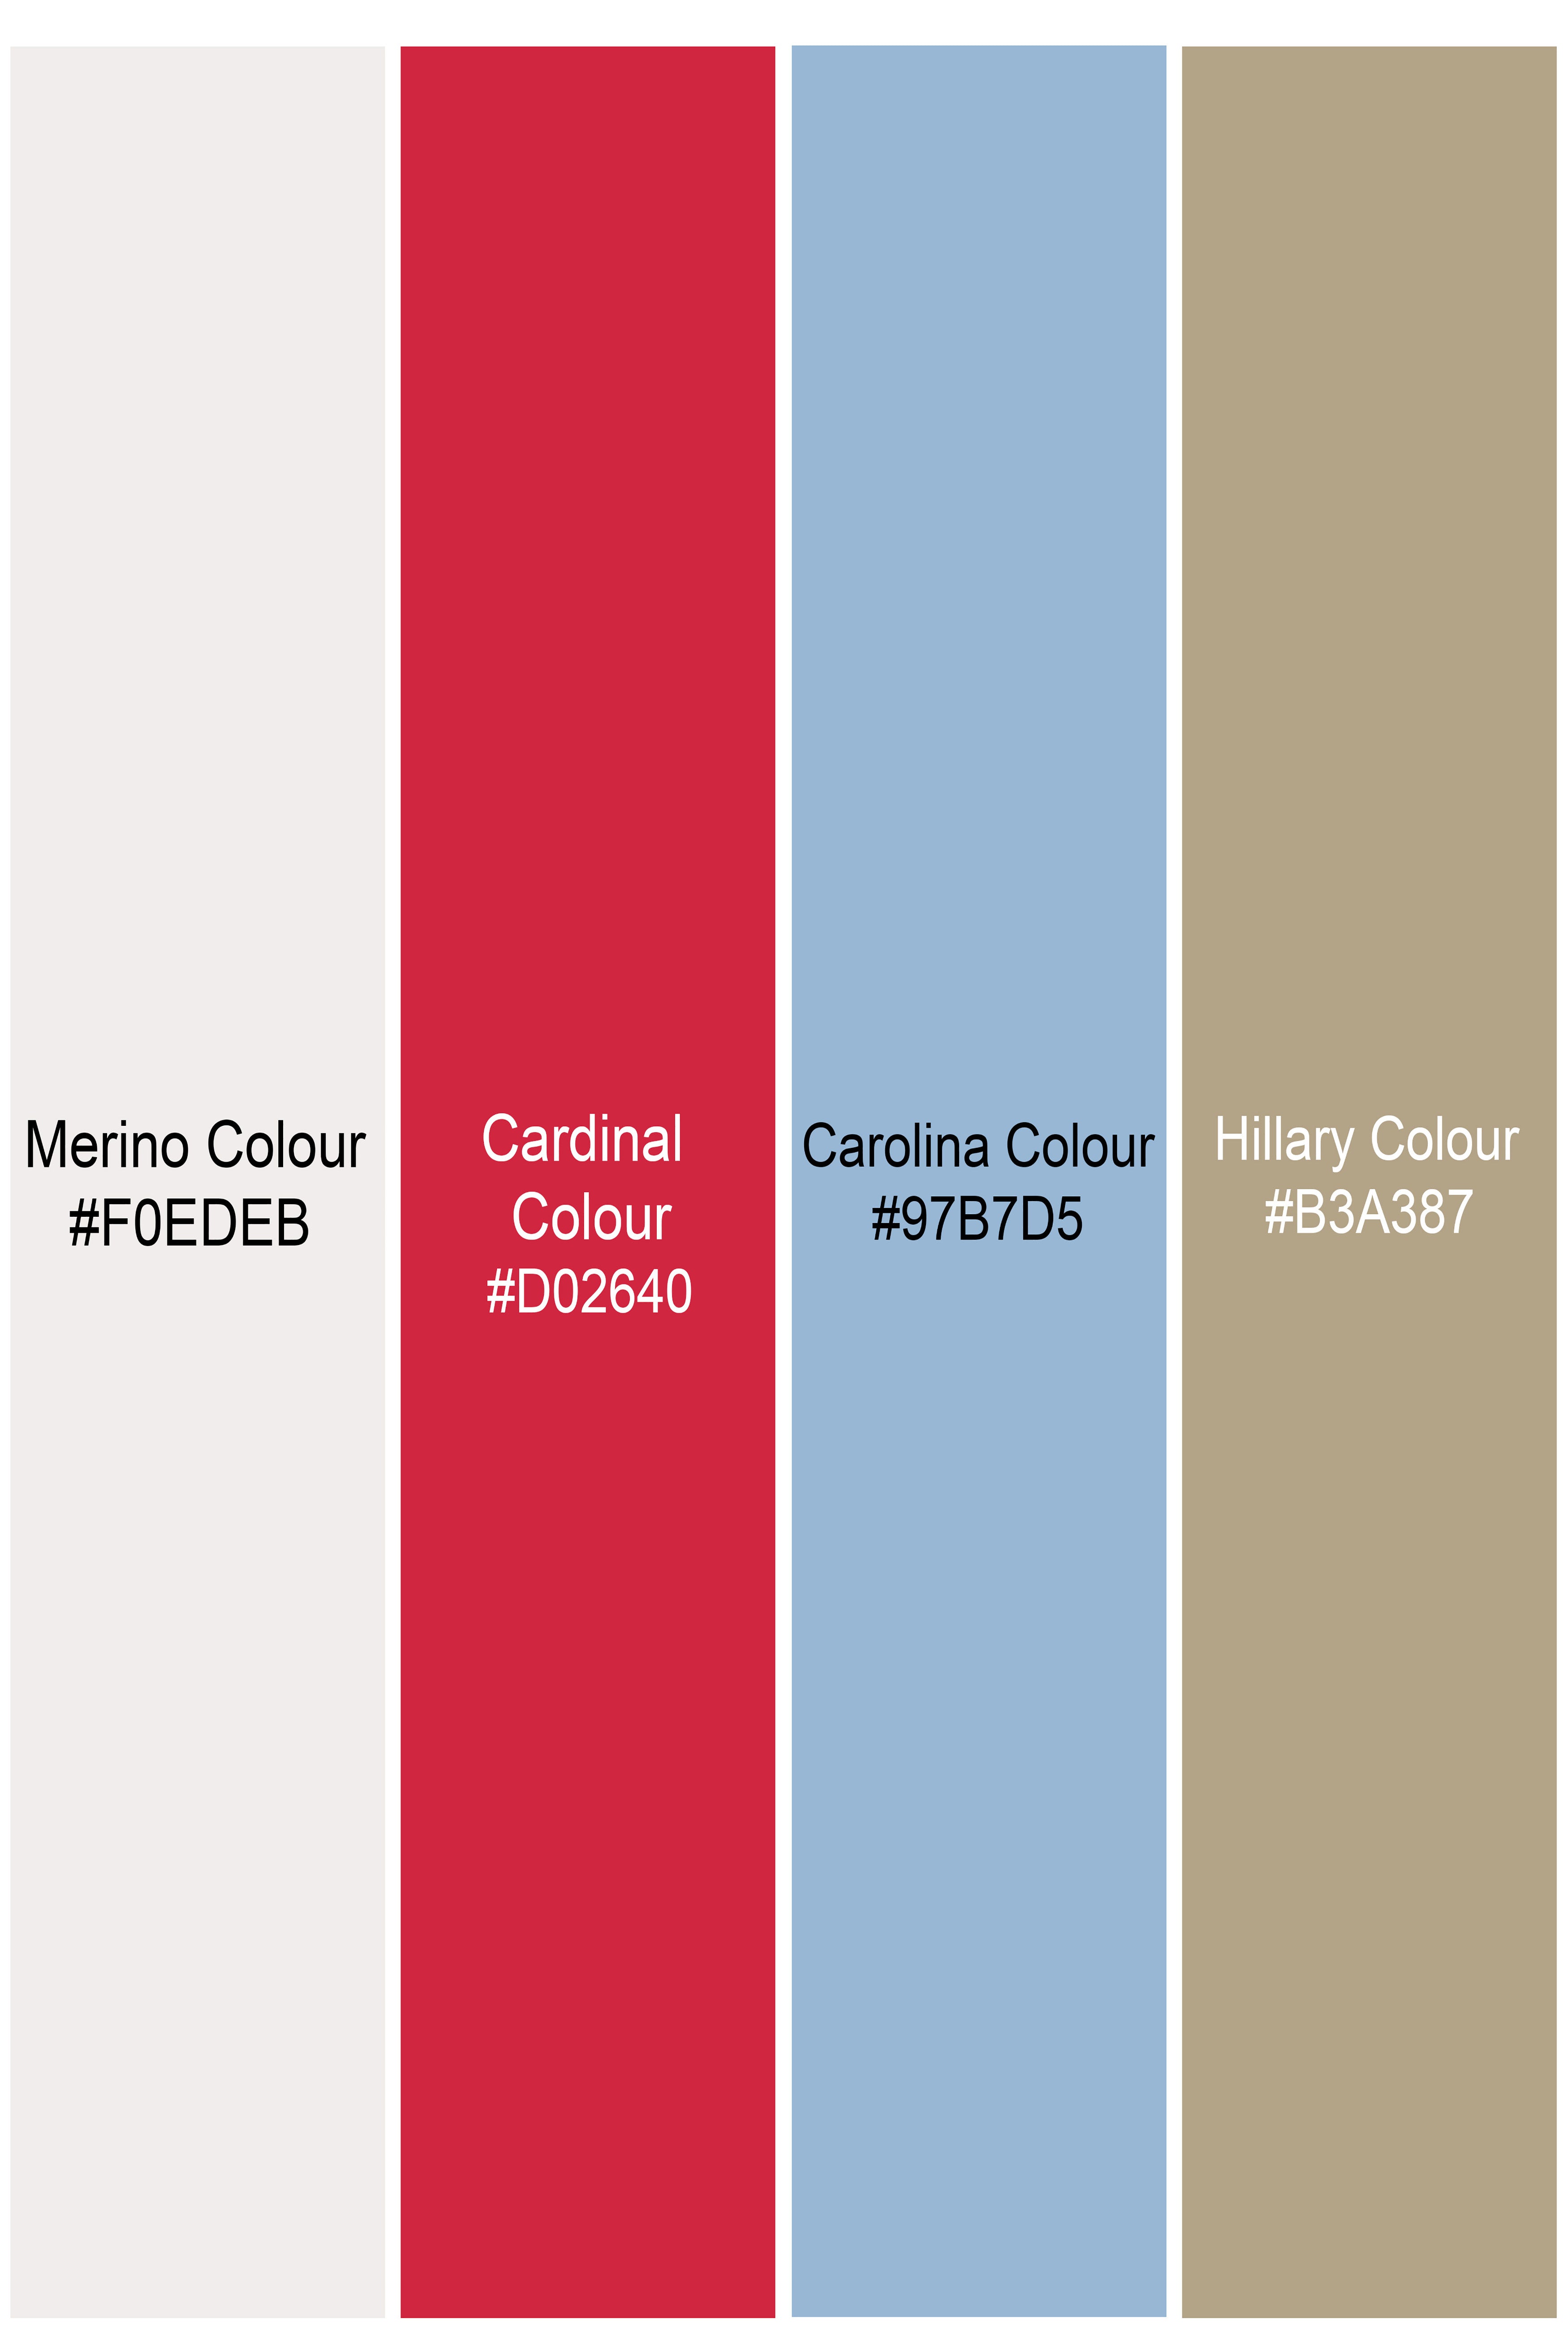 Merino Cream and Cardinal Red Floral Printed Lightweight Premium Cotton Oversized Shirt